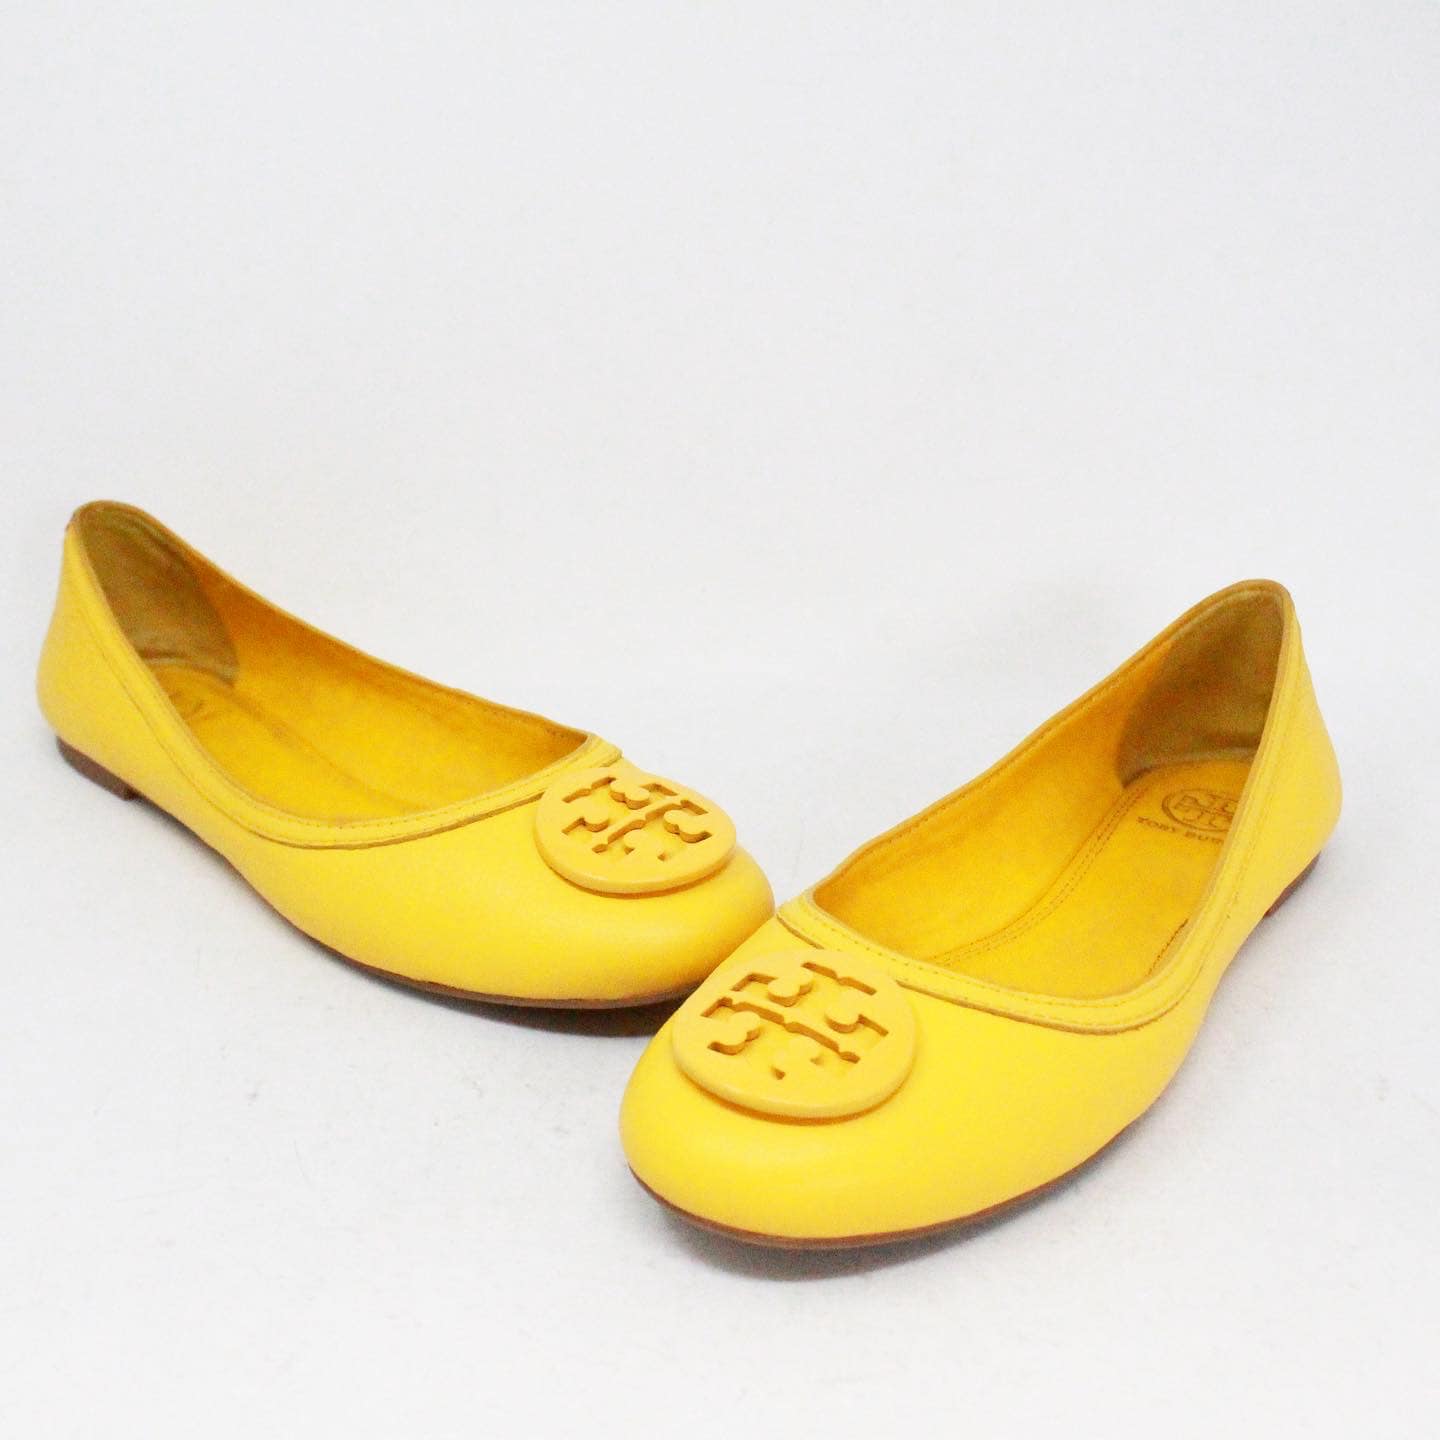 TORY BURCH Sunshine Yellow Abby Ballet Tumbled Leather Flats US 8 EU 38 item 41095 a